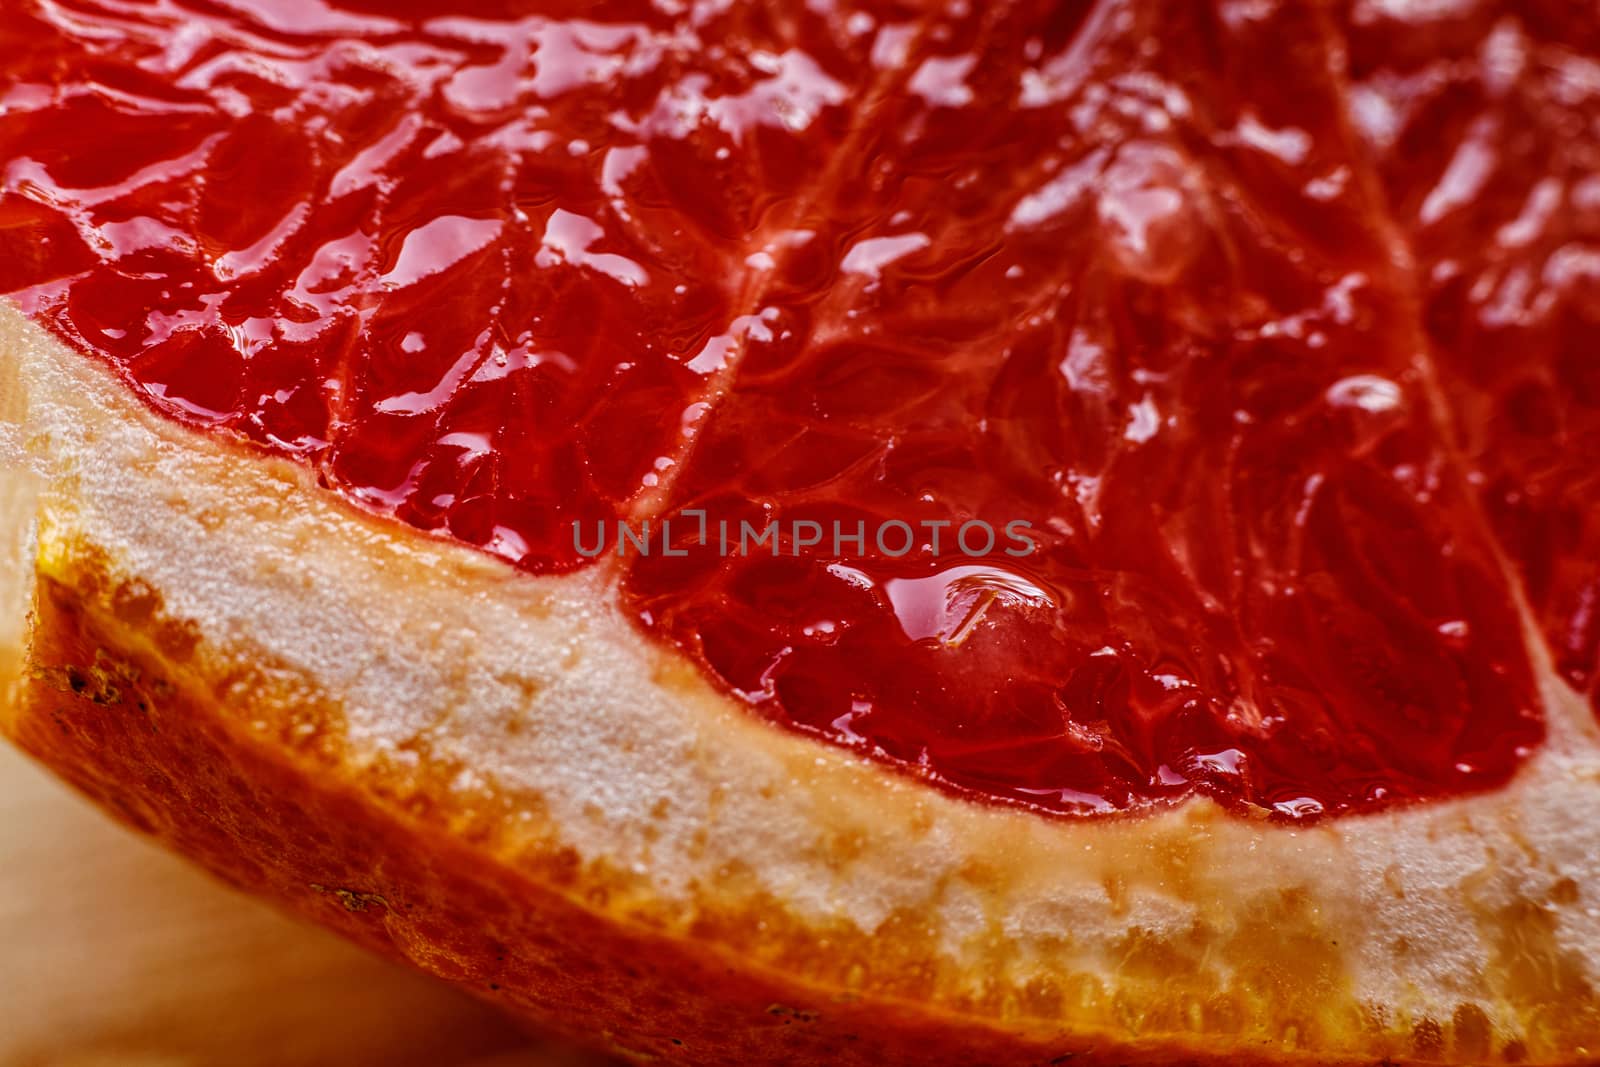 Slice of grapefruit close up